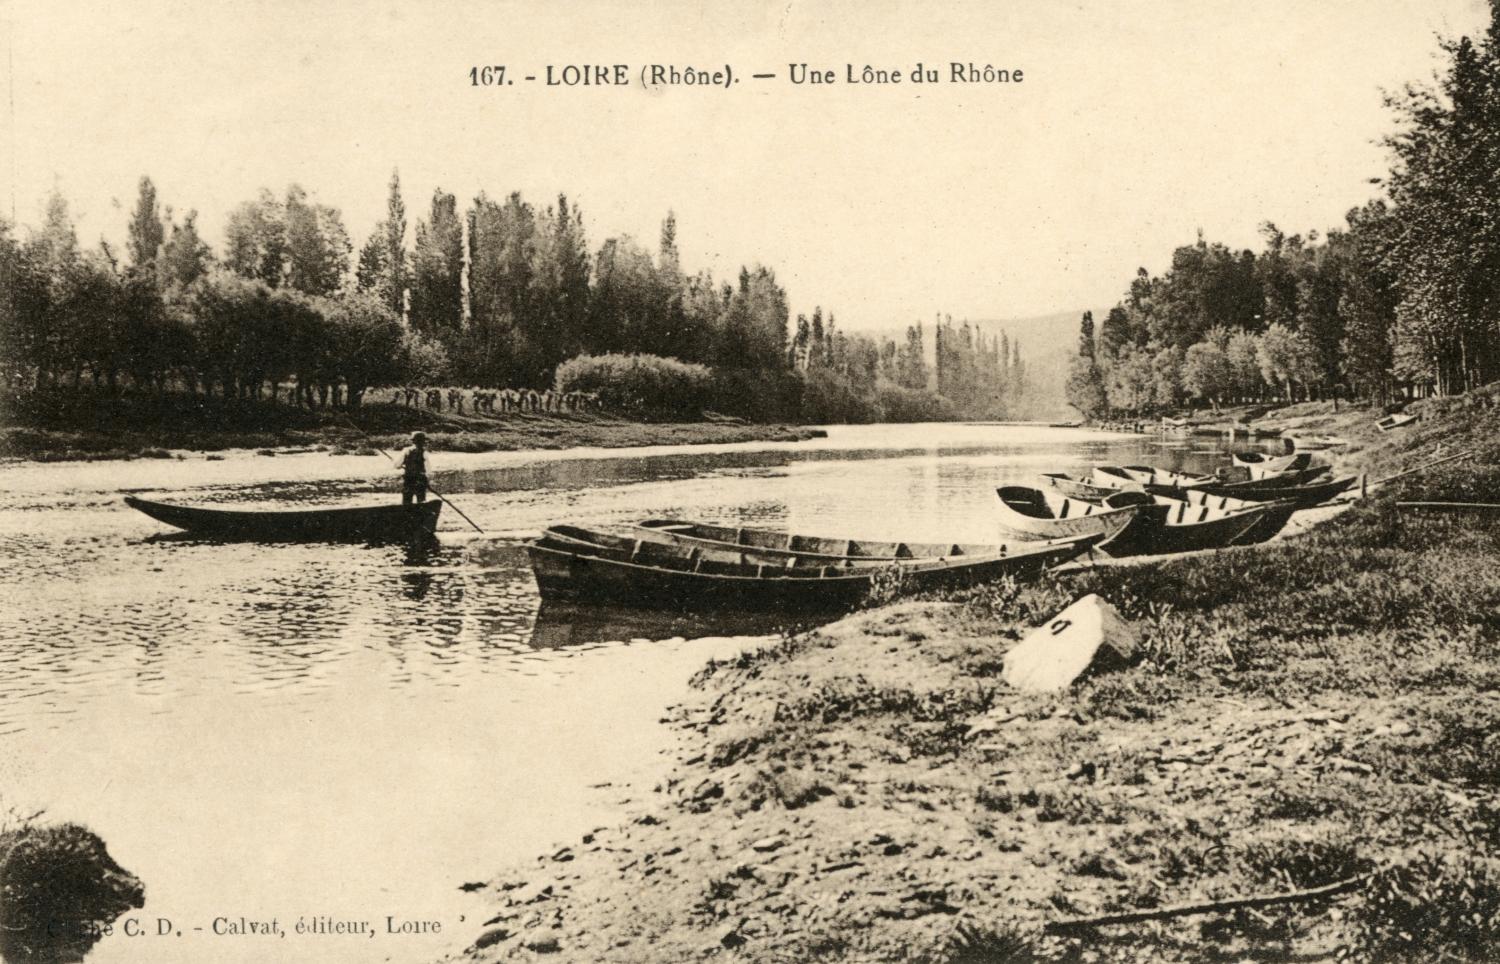 Loire (Rhône). - Une lône du Rhône